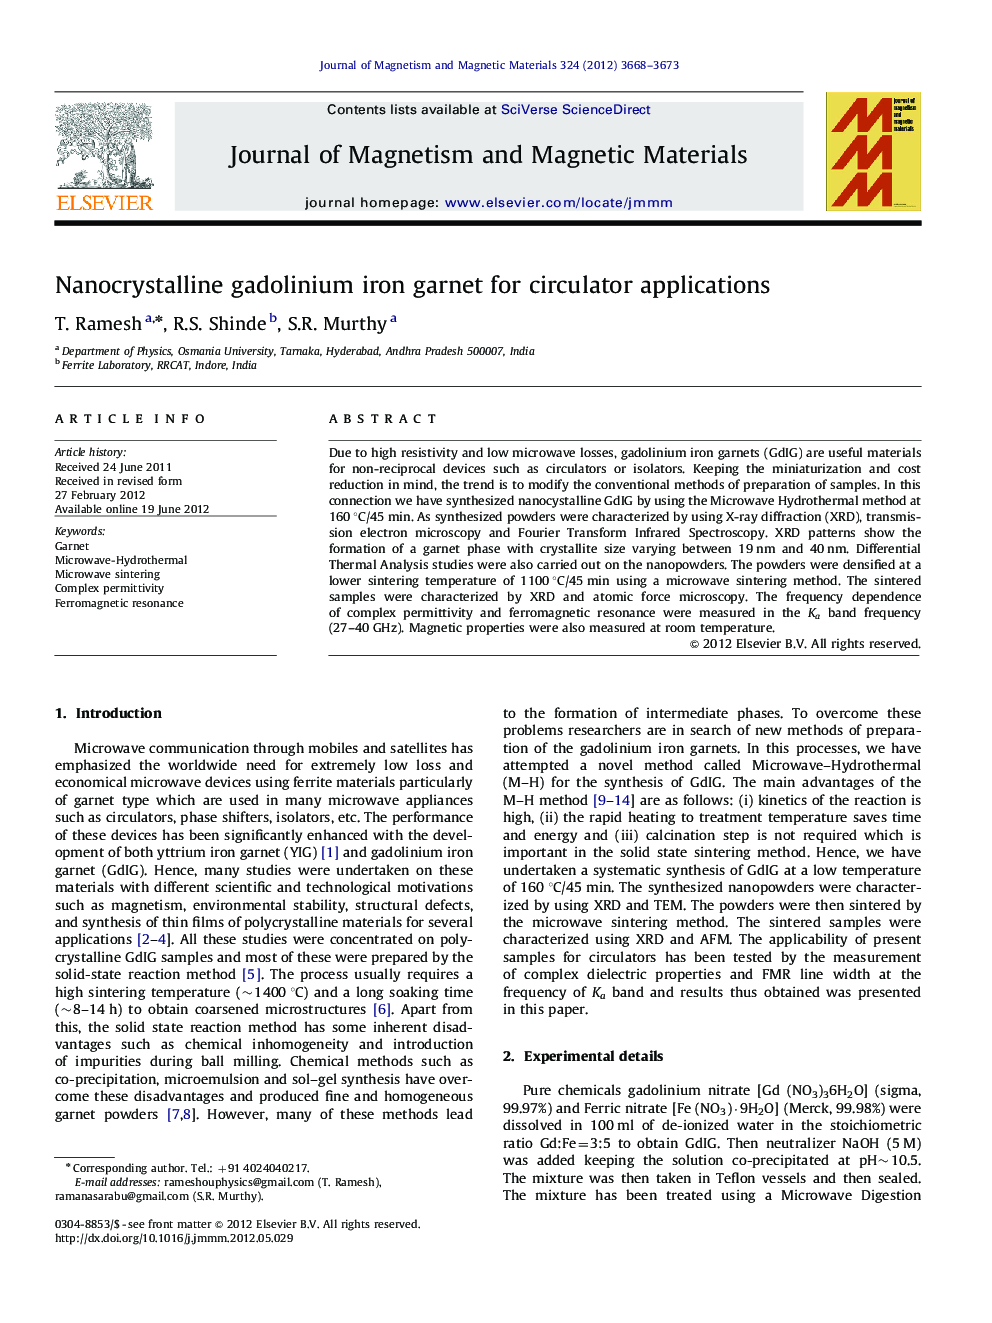 Nanocrystalline gadolinium iron garnet for circulator applications